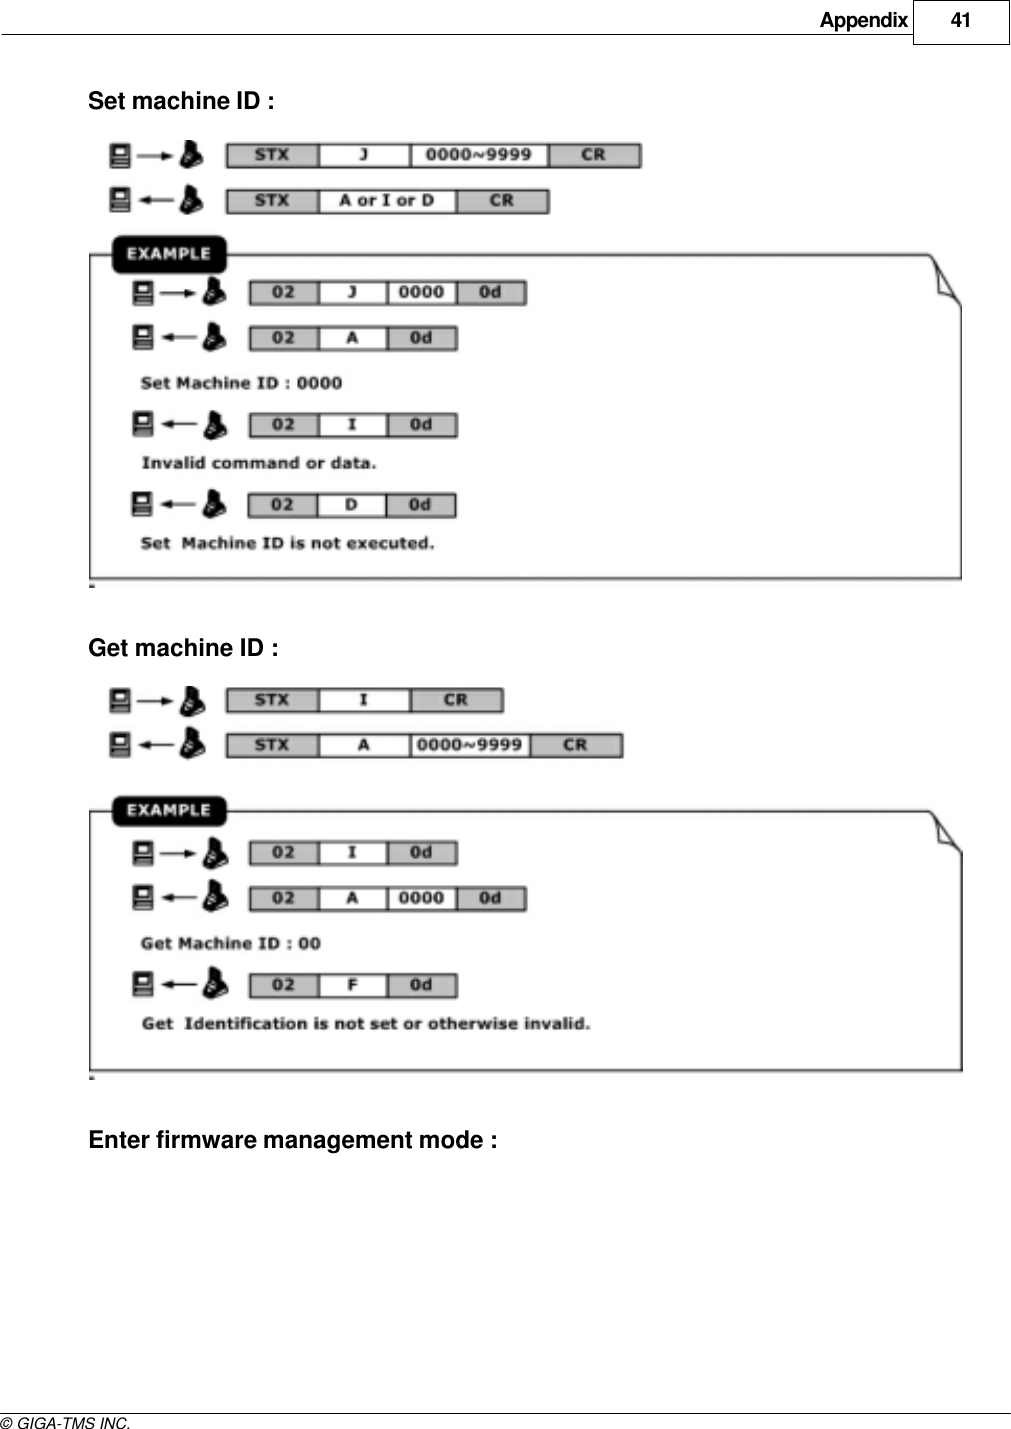 Appendix 41© GIGA-TMS INC.Set machine ID :Get machine ID :Enter firmware management mode :